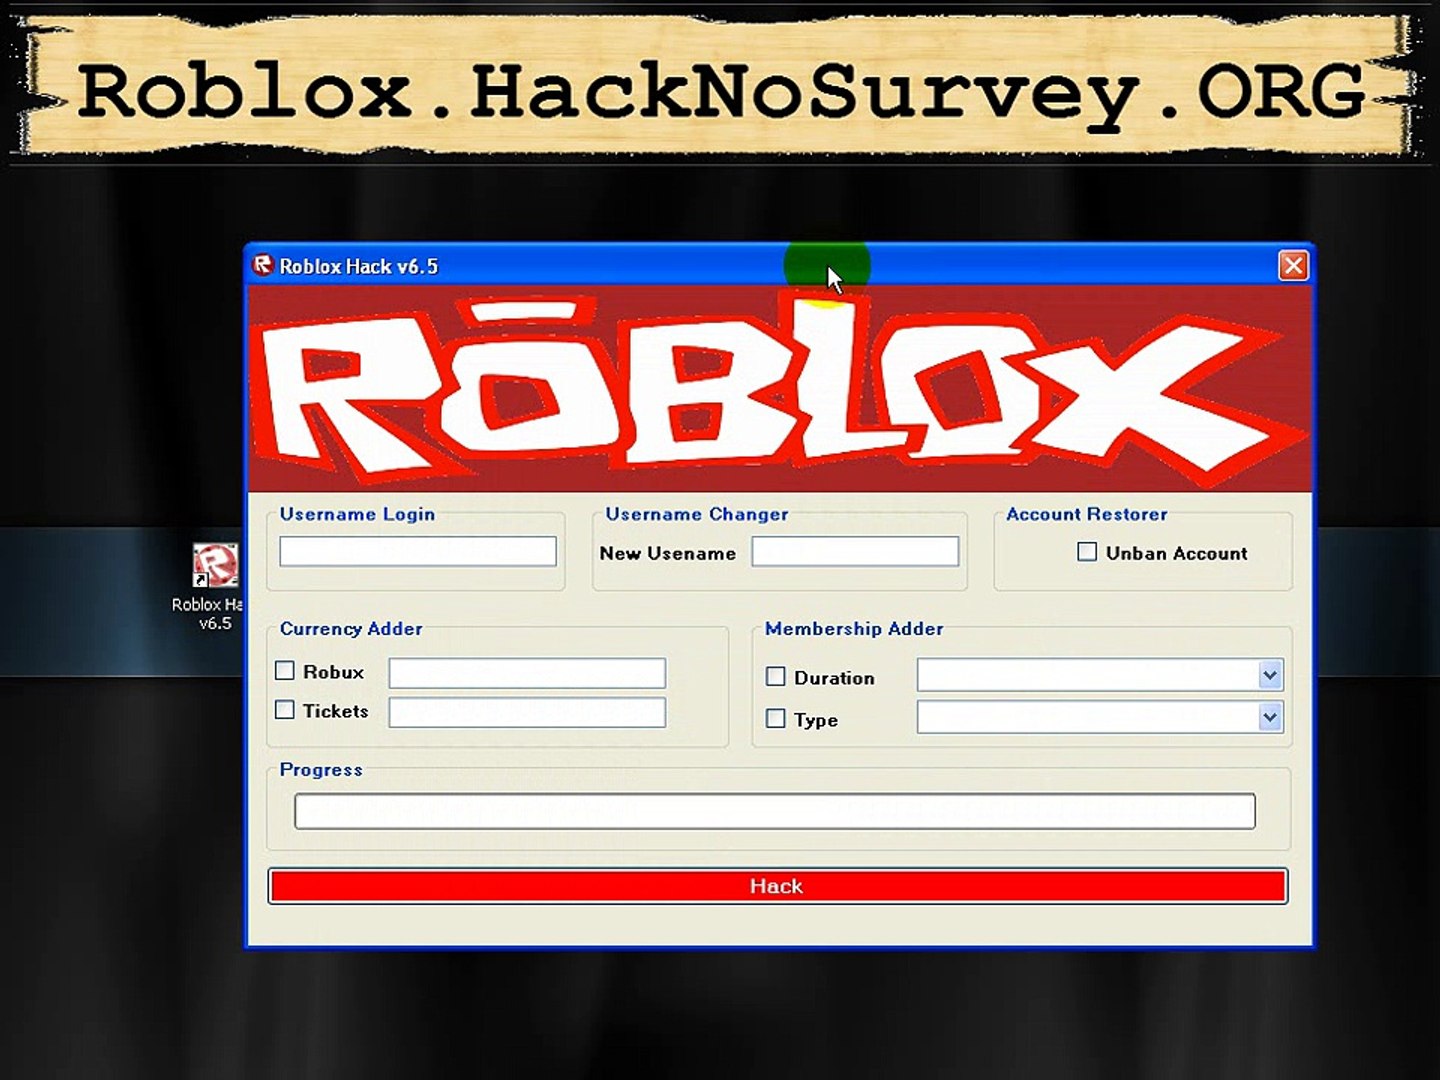 Roblox Hack 2015 Roblox Robux Hack Generator 2015 Membership Hack Video Dailymotion - working updated how to get free roblox robux tix hack generator